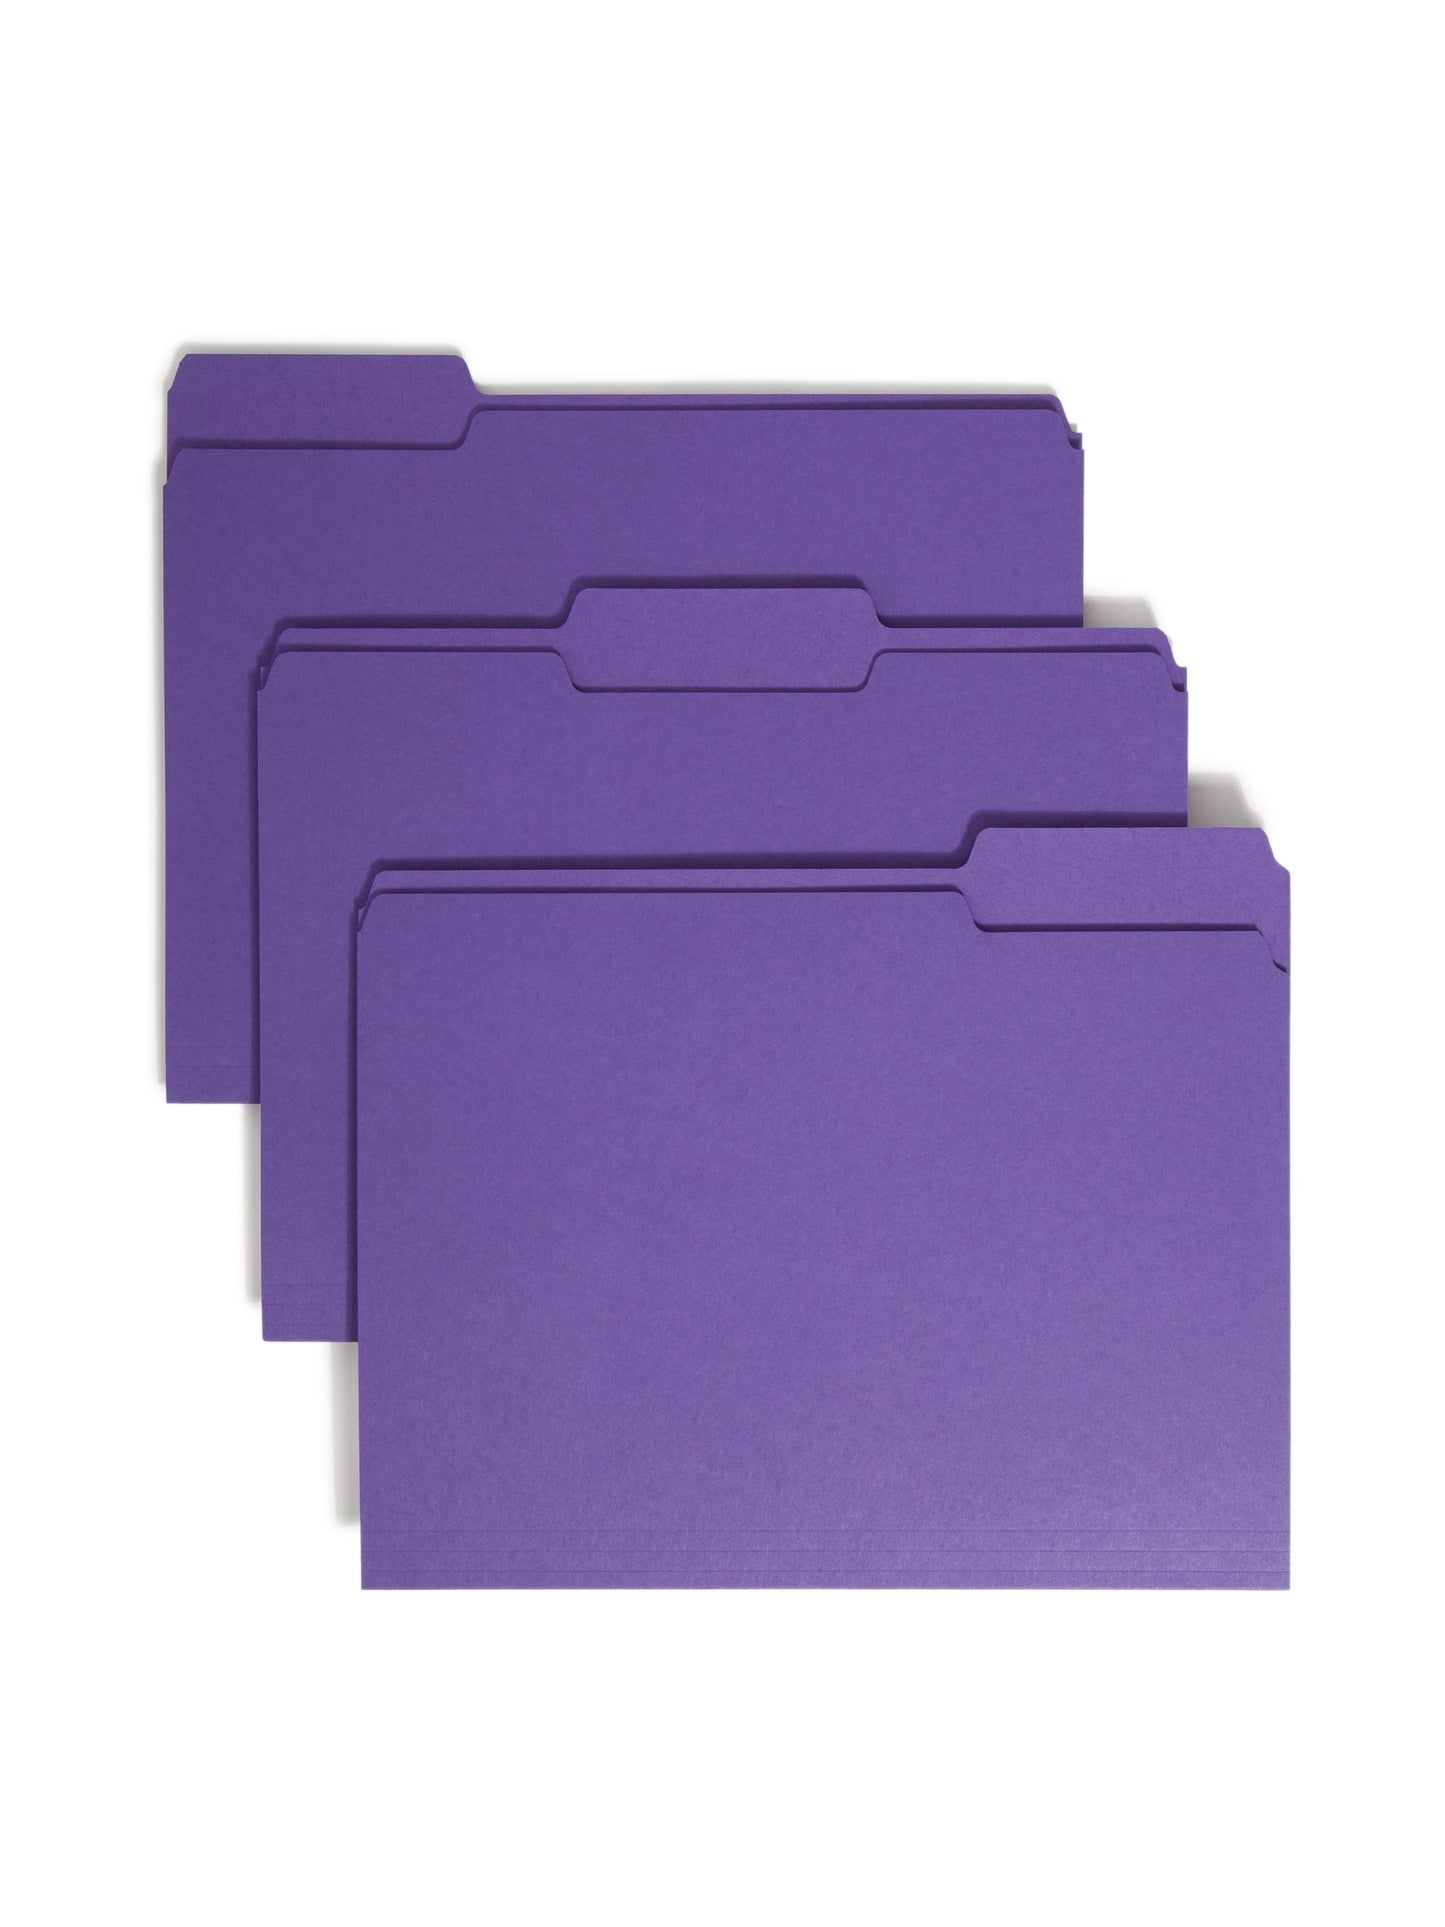 Standard File Folders, 1/3-Cut Tab, Purple Color, Letter Size, Set of 100, 086486130431